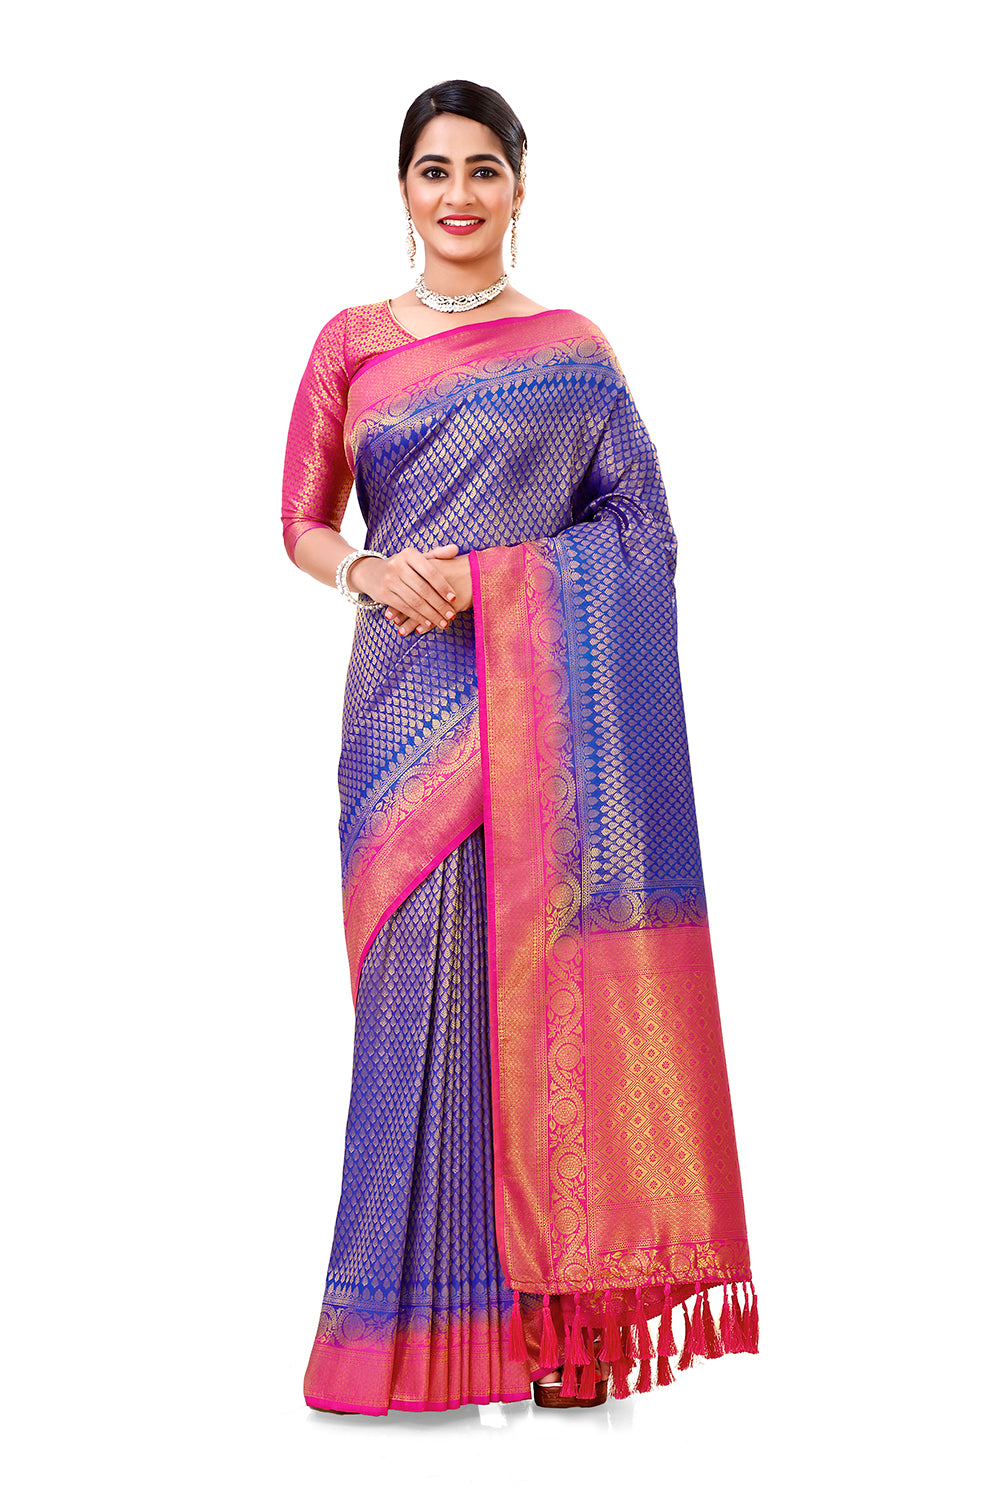 Shop Pink Kanjivaram Sari Online in USA with Green Blue Check